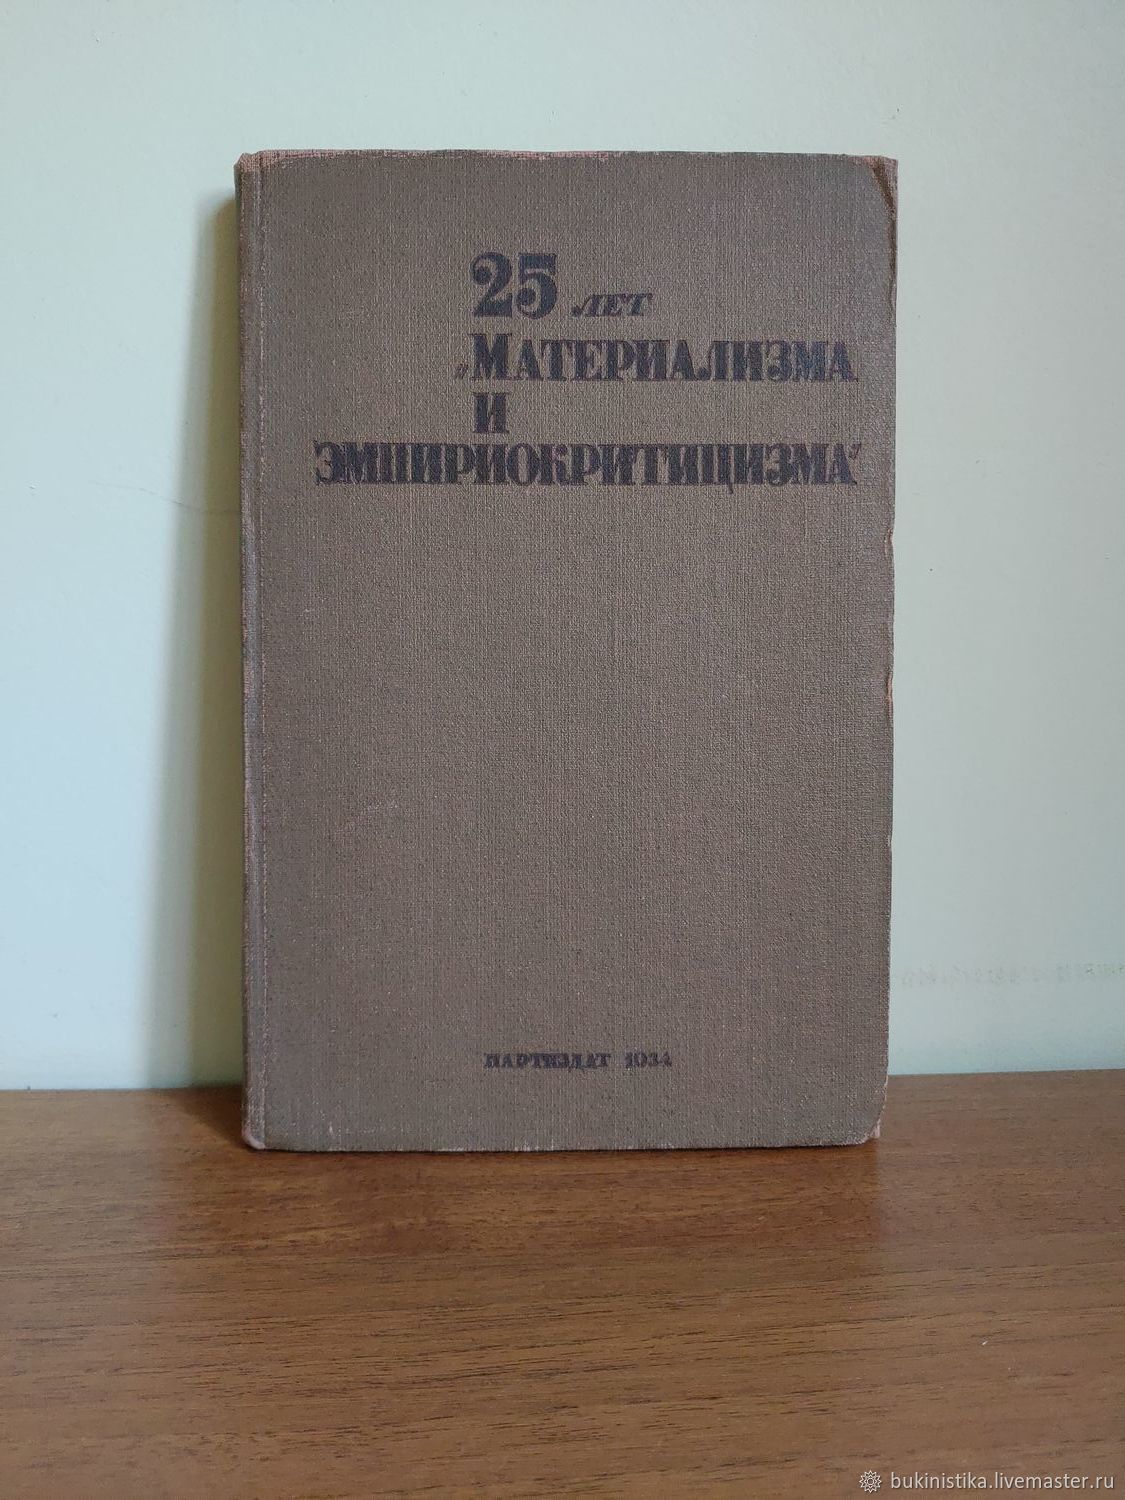 Книга 1934 год. Книги 1934 года. Материализм и эмпириокритицизм книга купить. Материализм и эмпириокритицизм 1931. Известная книга 1934 года.